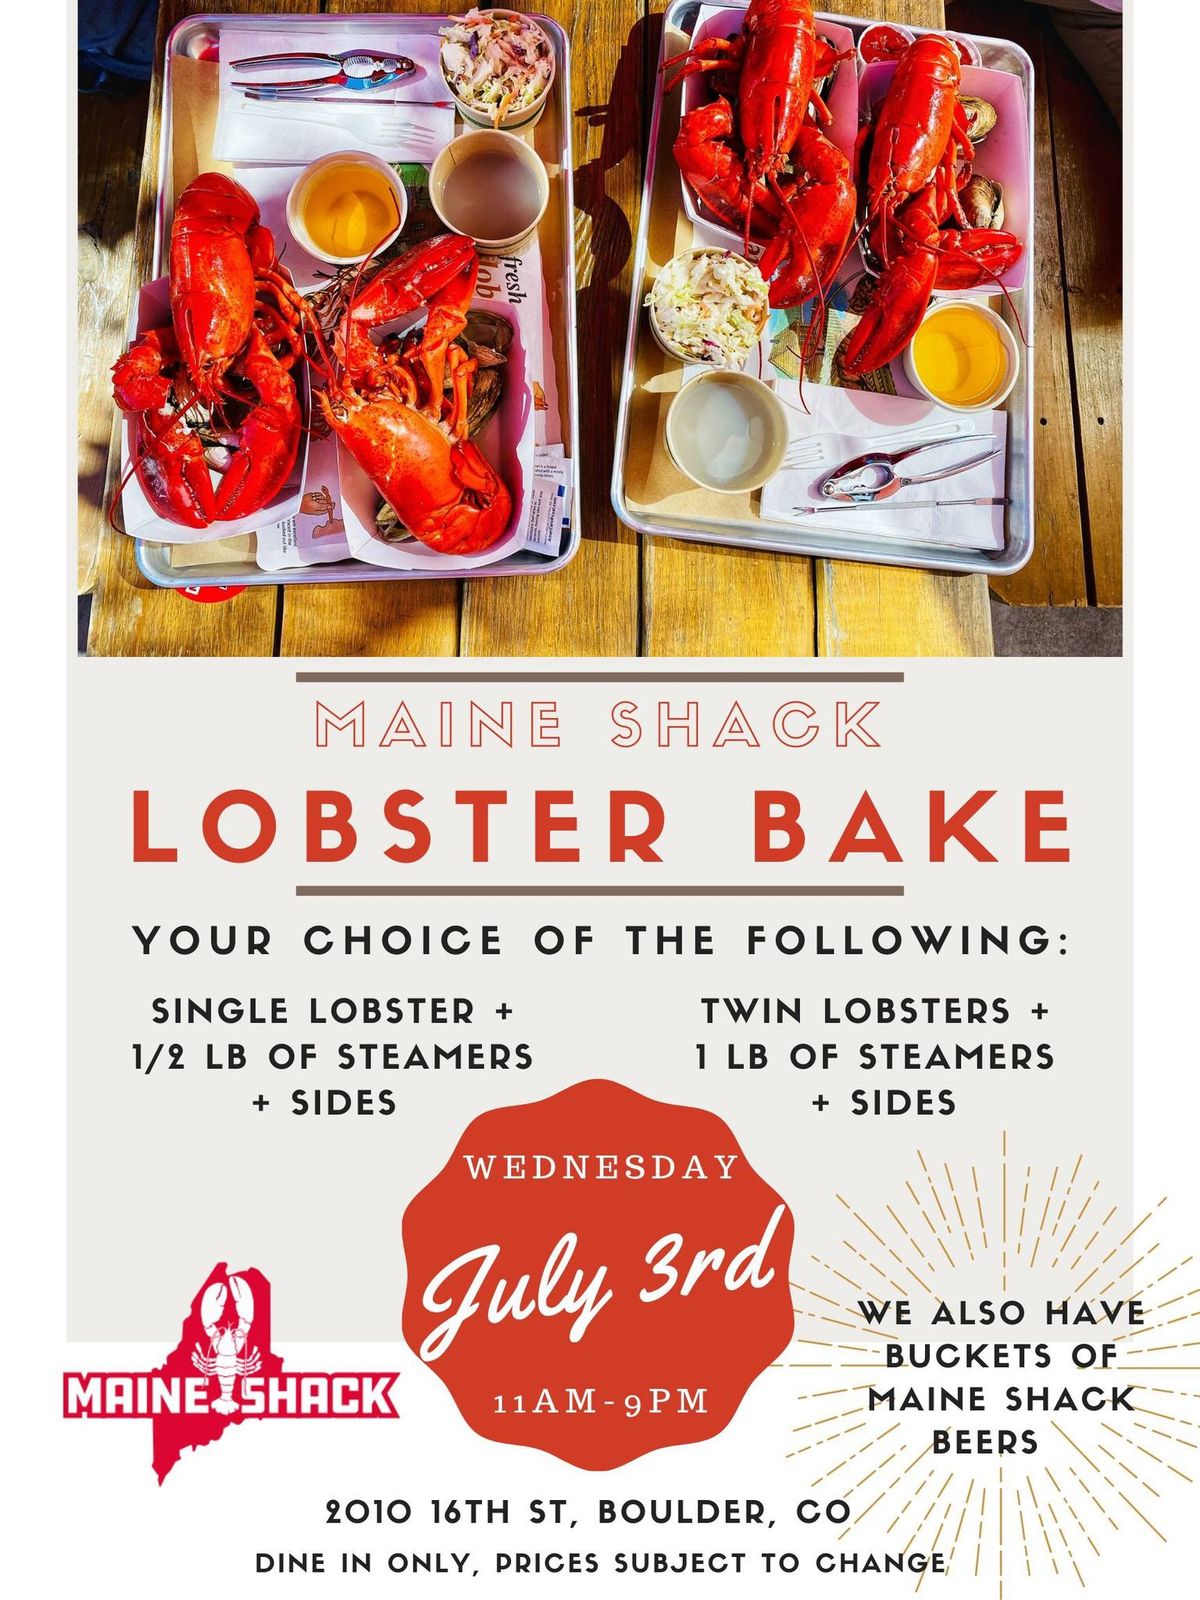 Maine Shack Lobster Bake